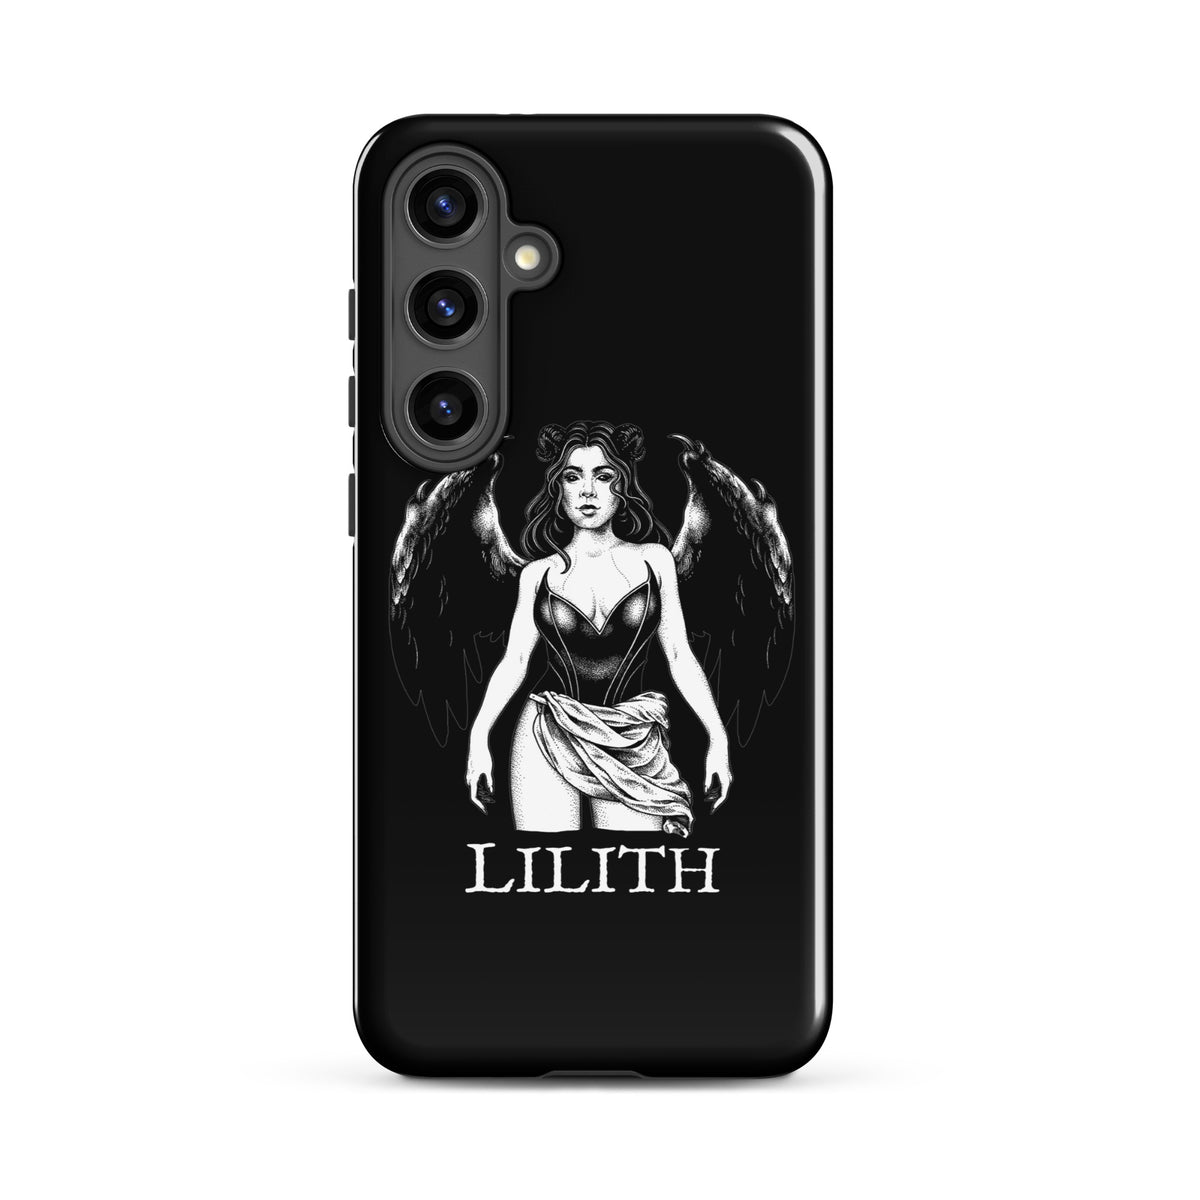 Lilith Tough Case for Samsung®